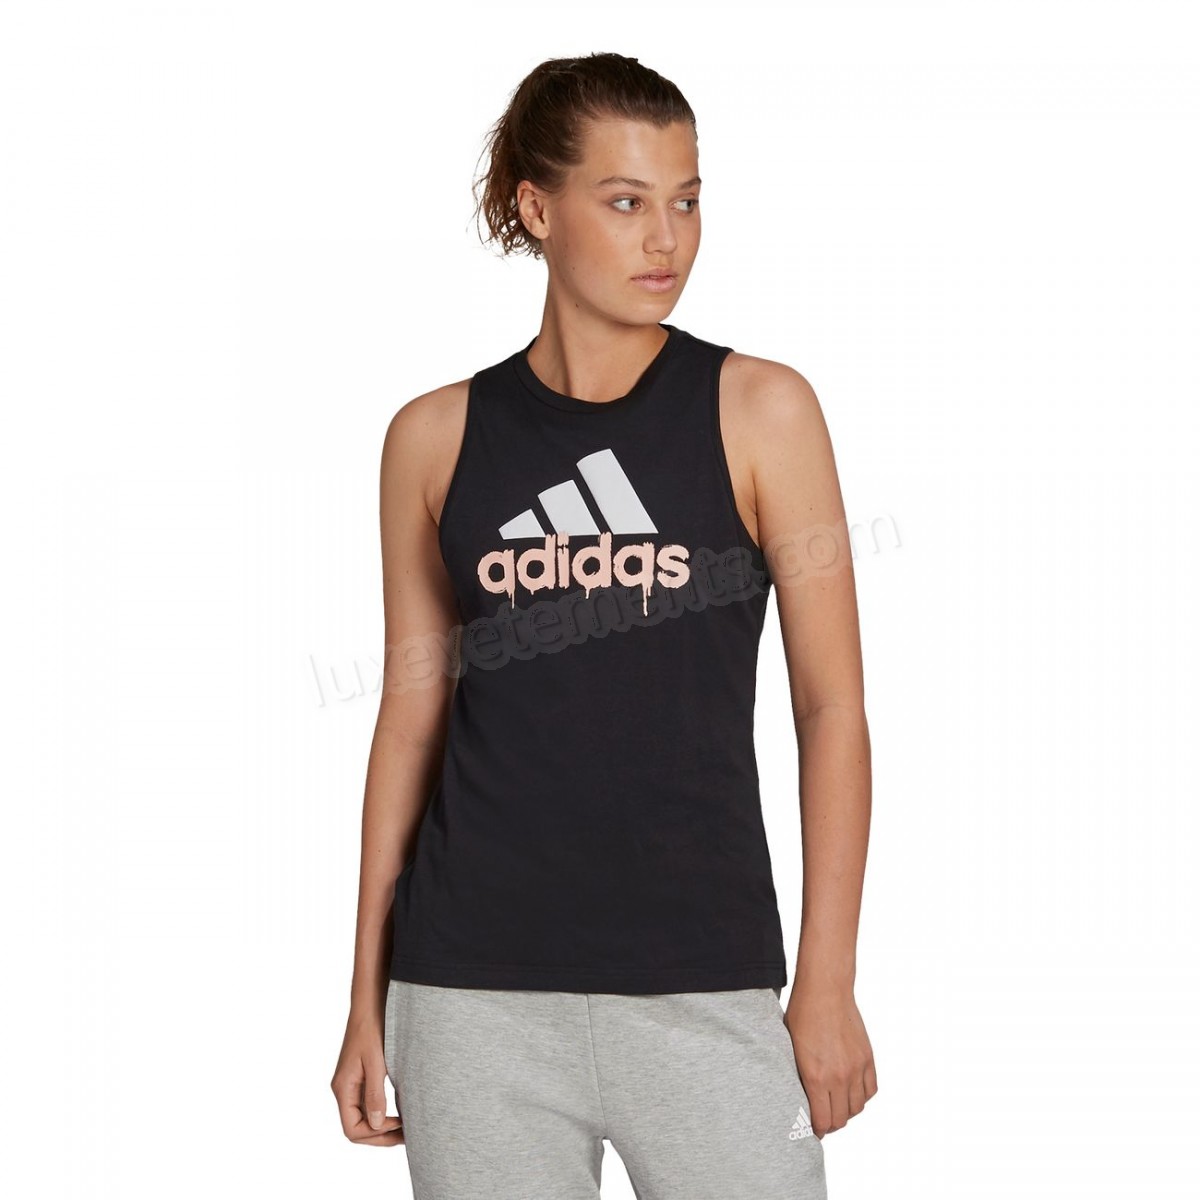 Adidas-Fitness femme ADIDAS Débardeur femme adidas Graphic Basic Vente en ligne - -4